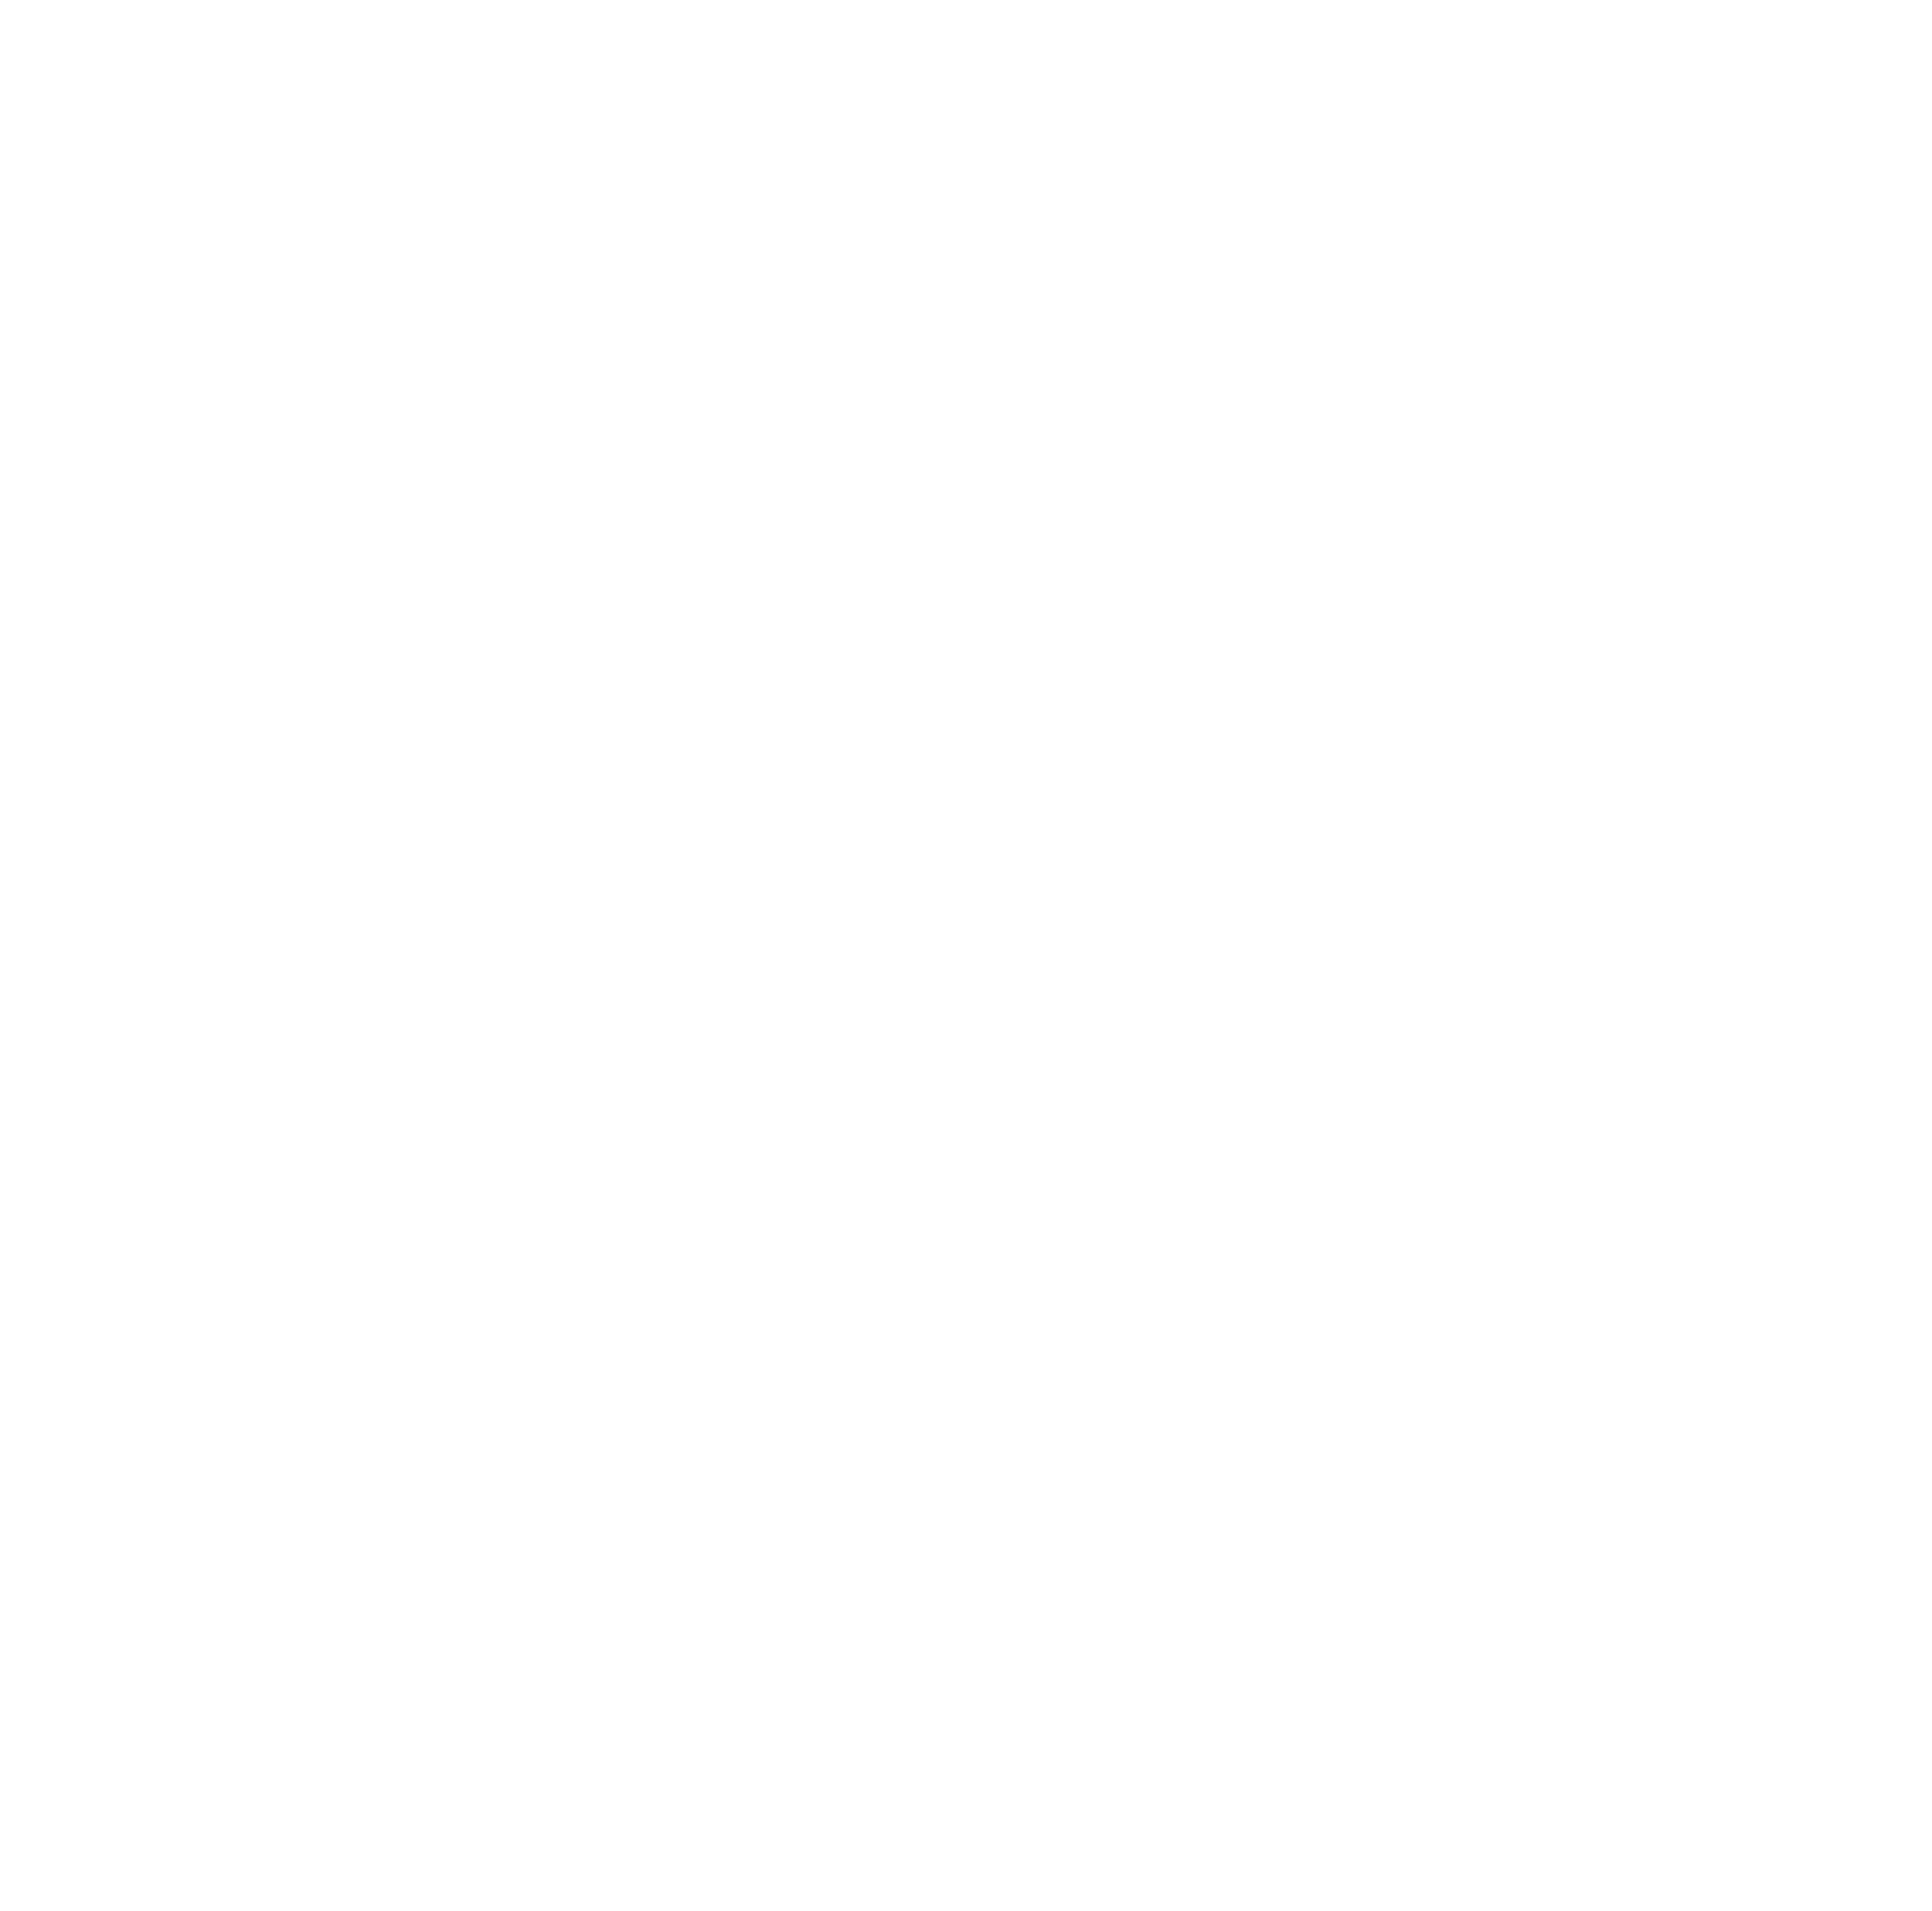 Dandelion Chandelier